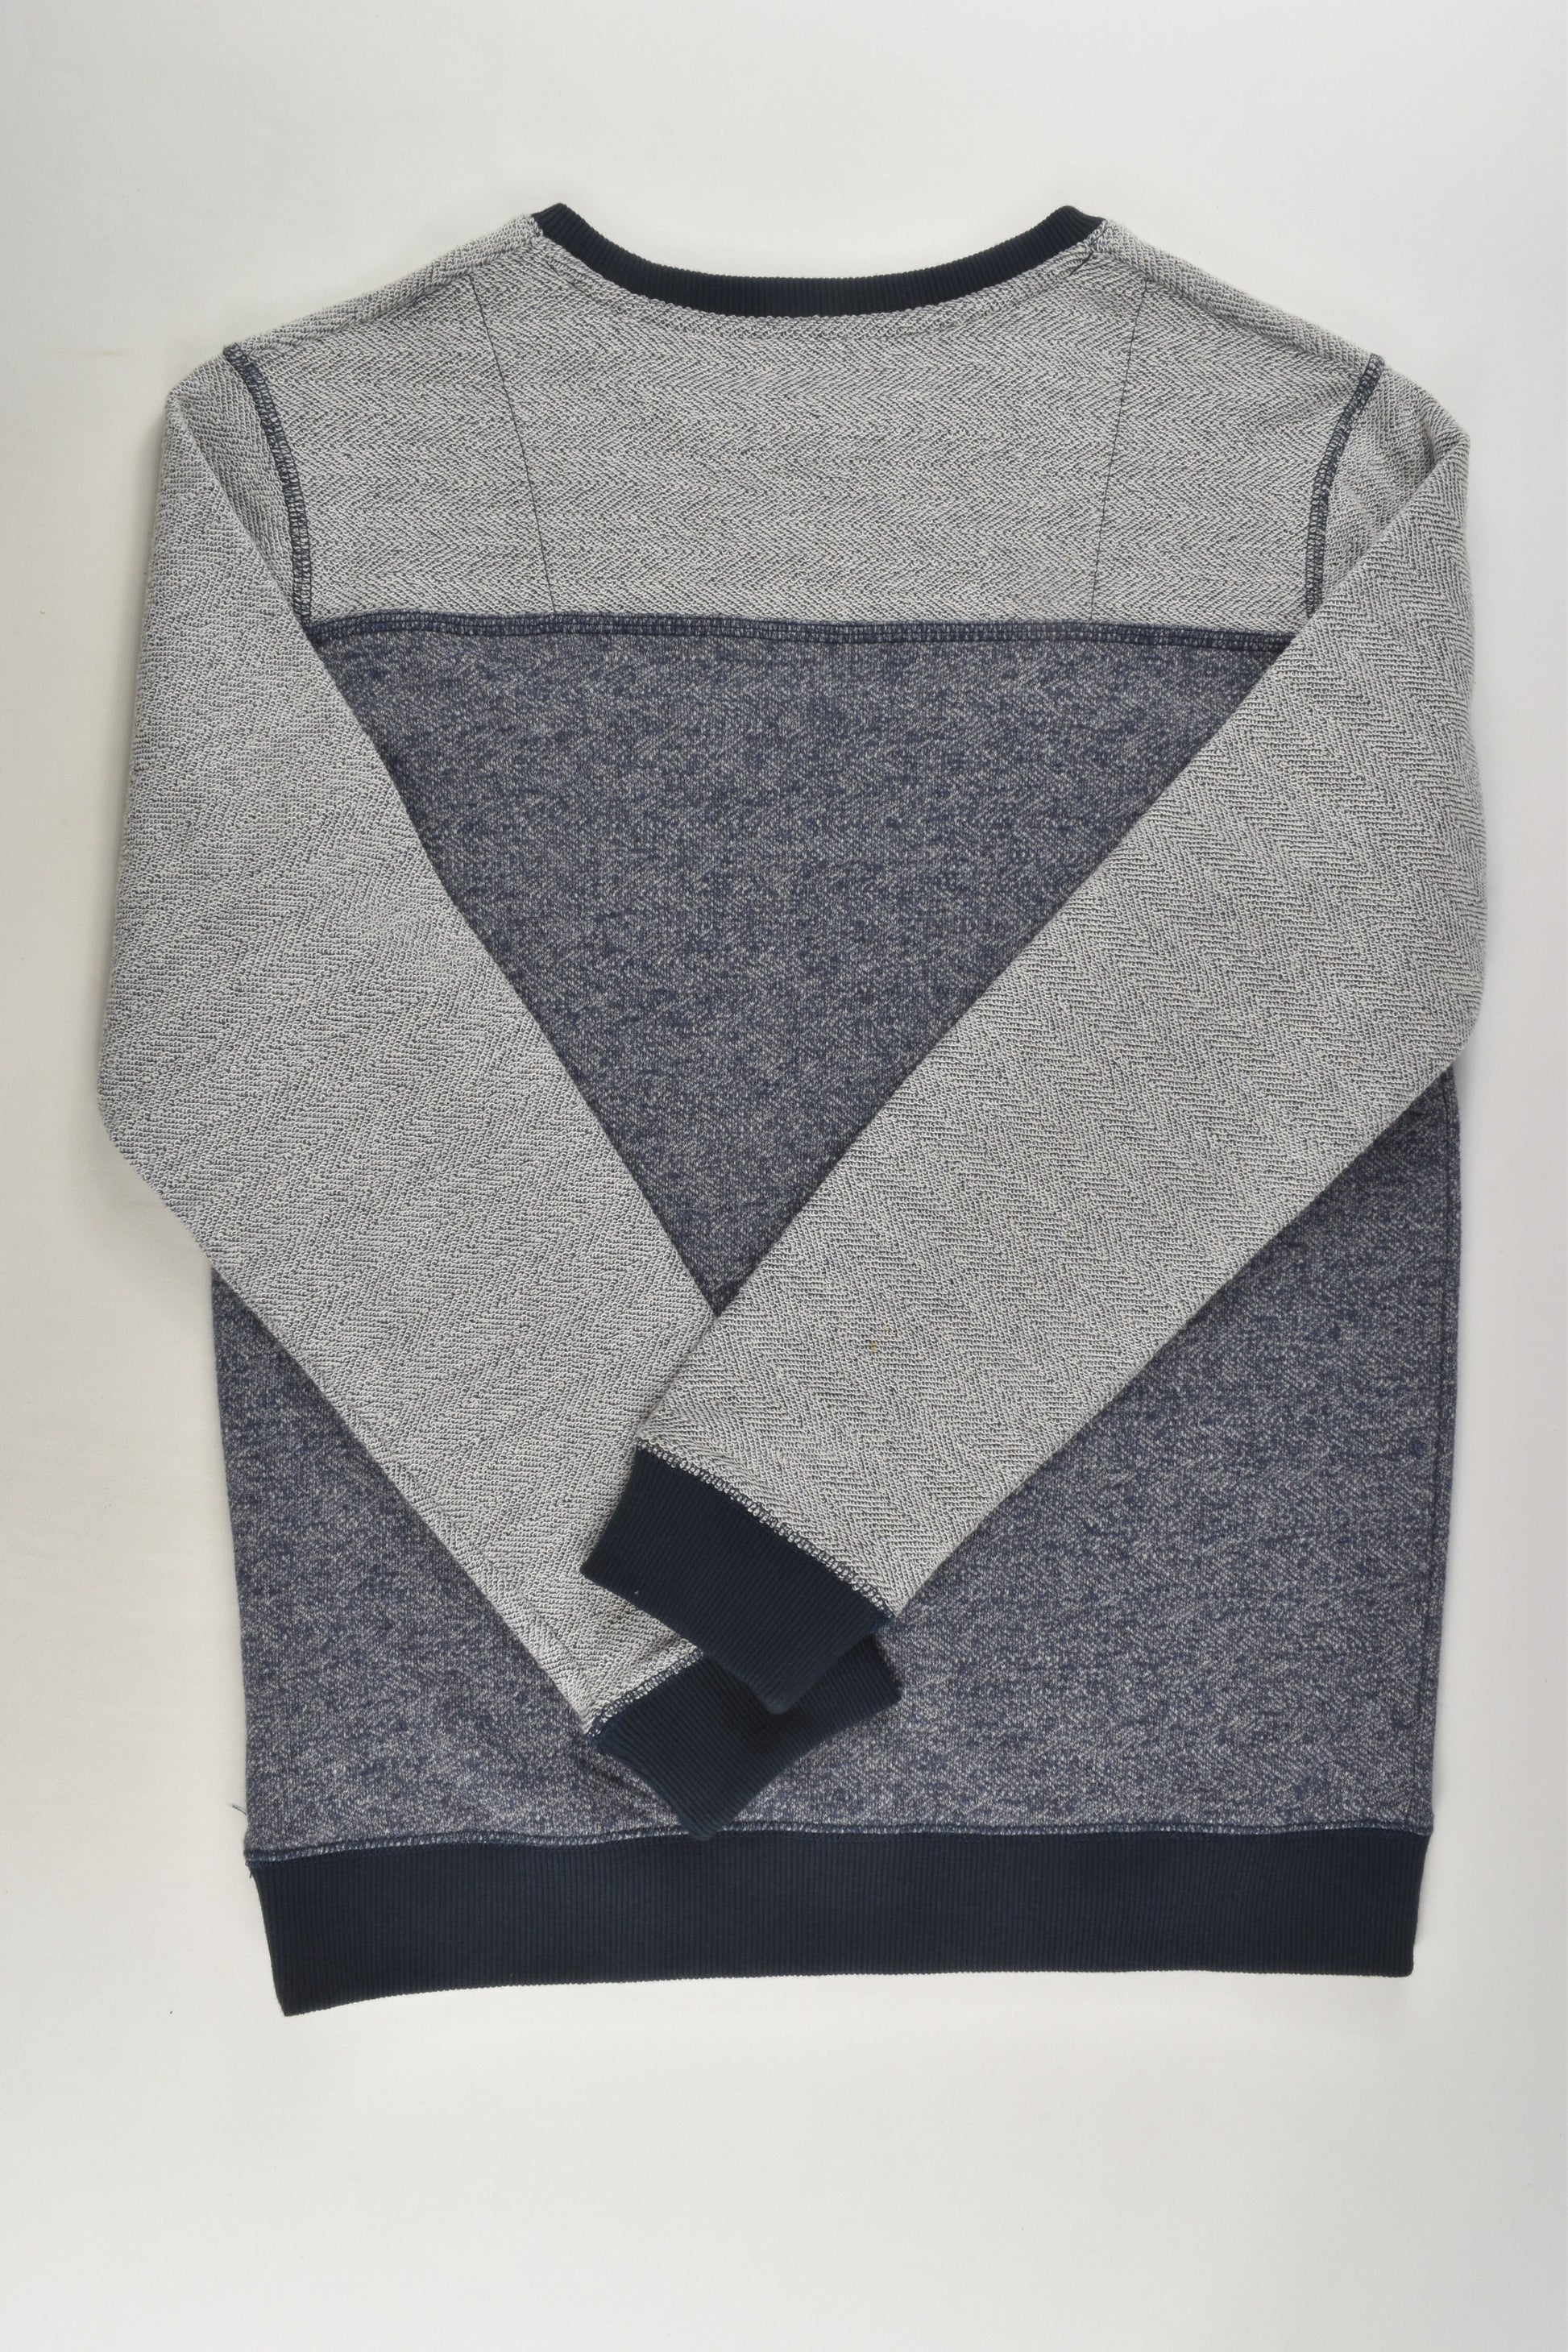 I11-ONE-11 Size 12 Sweater